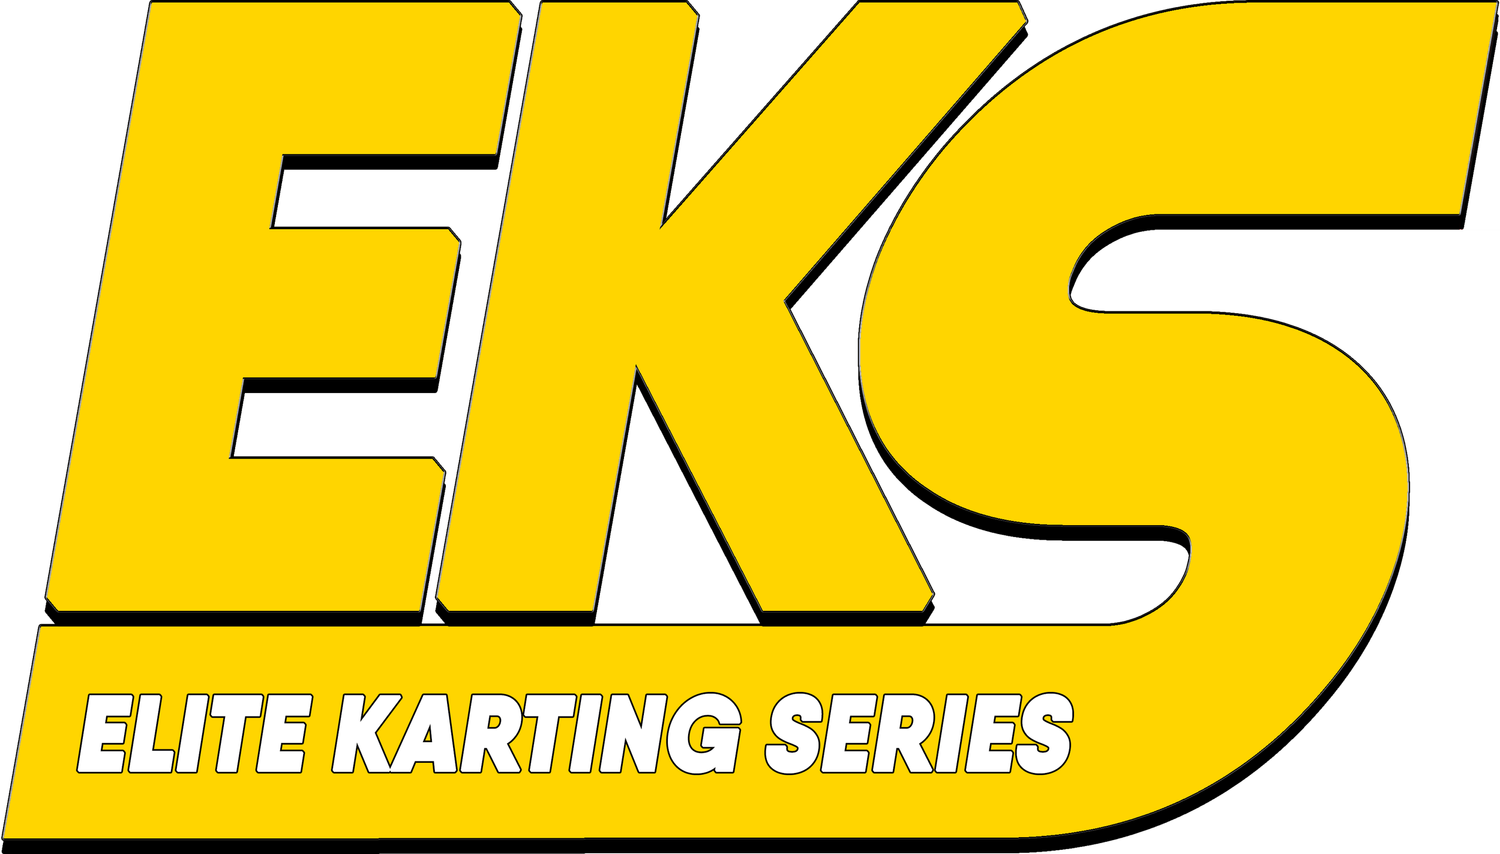 Elite Karting Series - The UK&#39;s fastest hire-karting championship